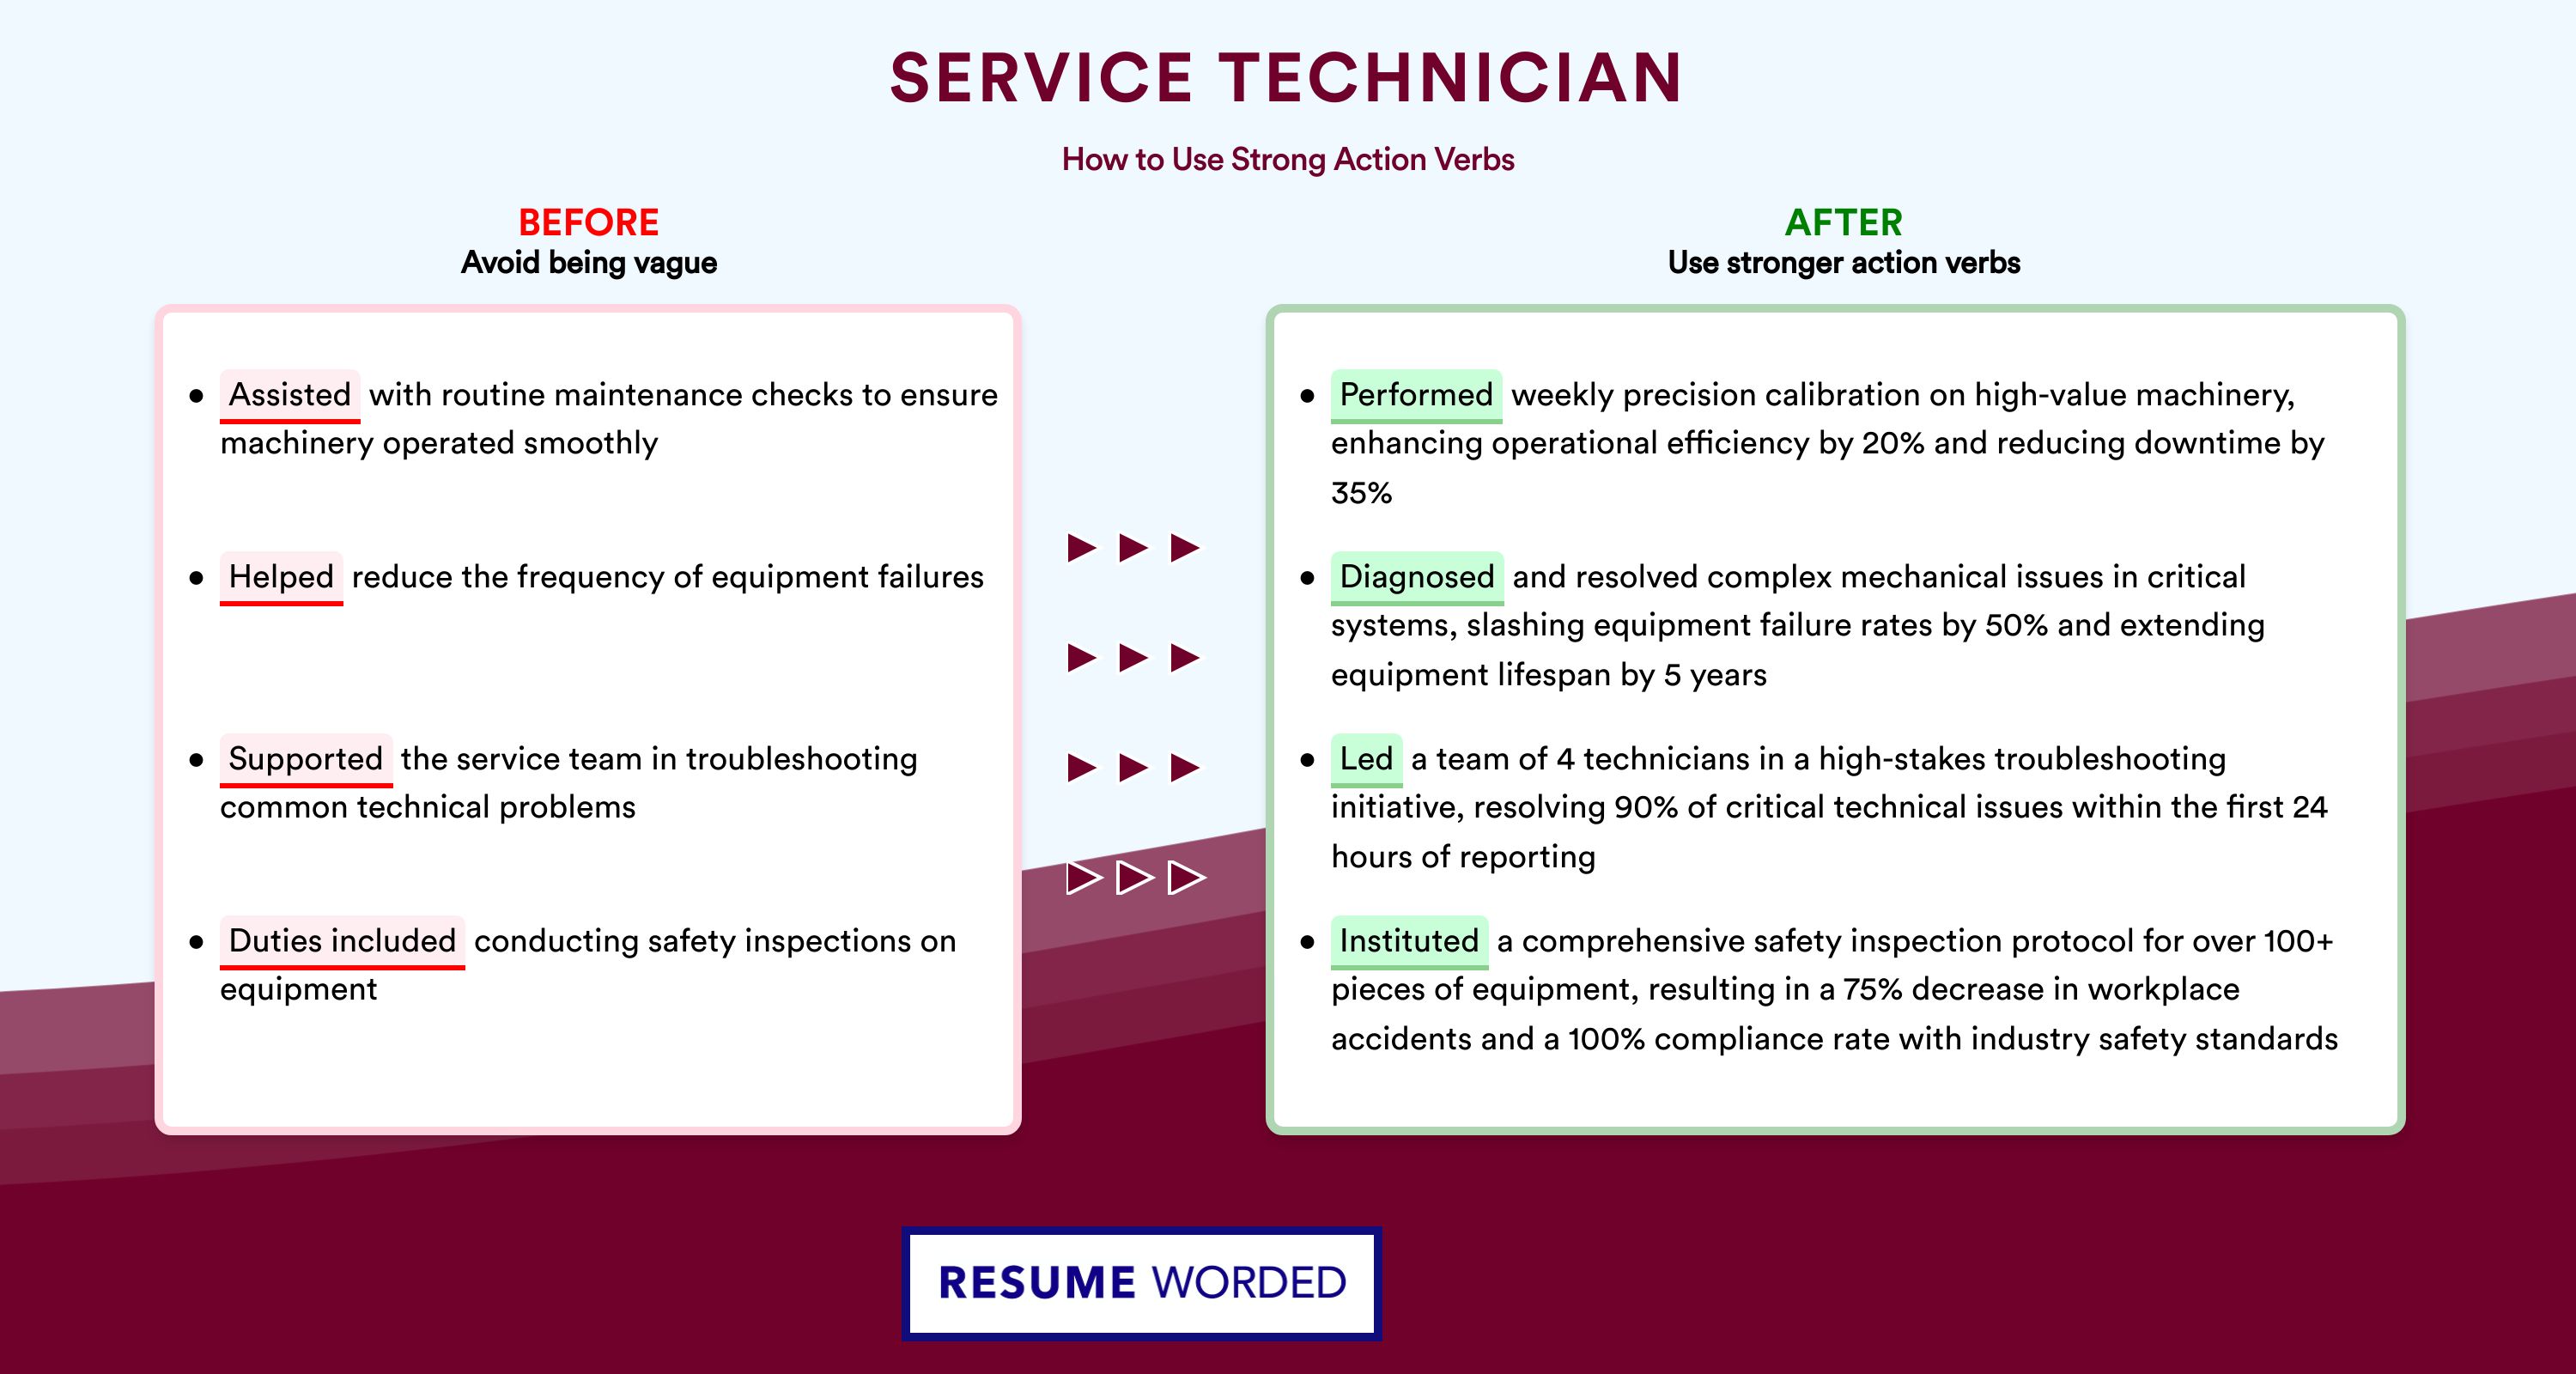 Action Verbs for Service Technician